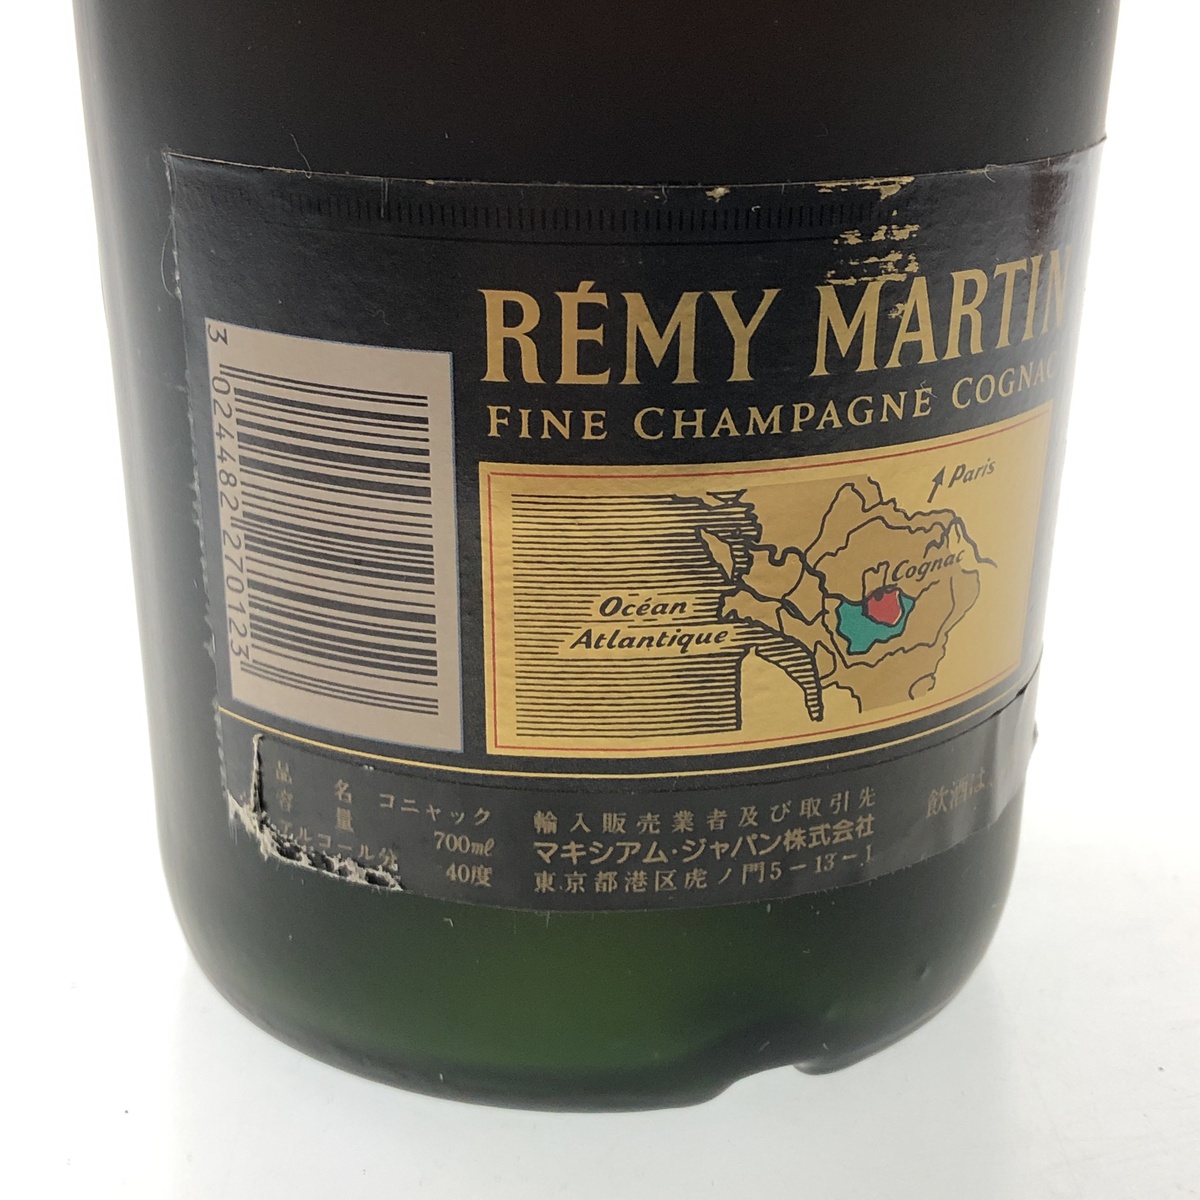 13%OFF 3本 REMY 新作送料無料 MARTIN CAMUS セット Hennessy ブランデー コニャック 700ml